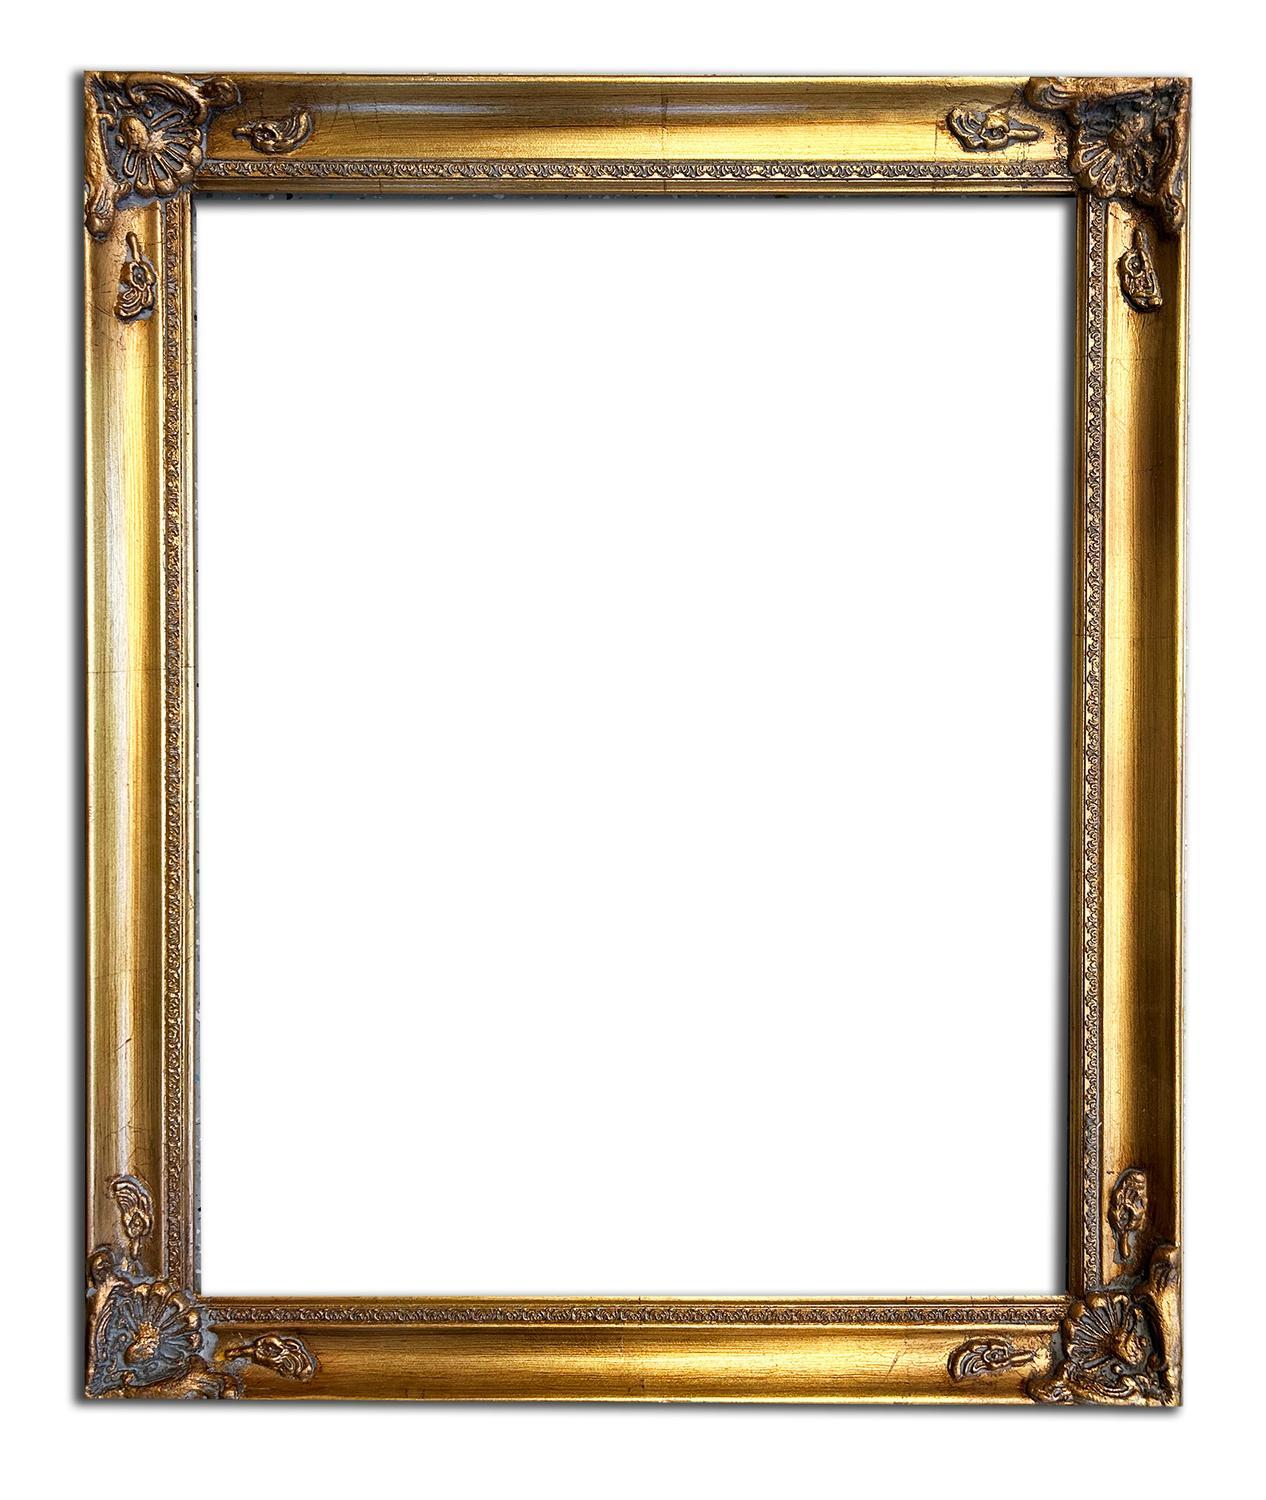 40x50 cm or 16x20 ins Wooden frame in golden color